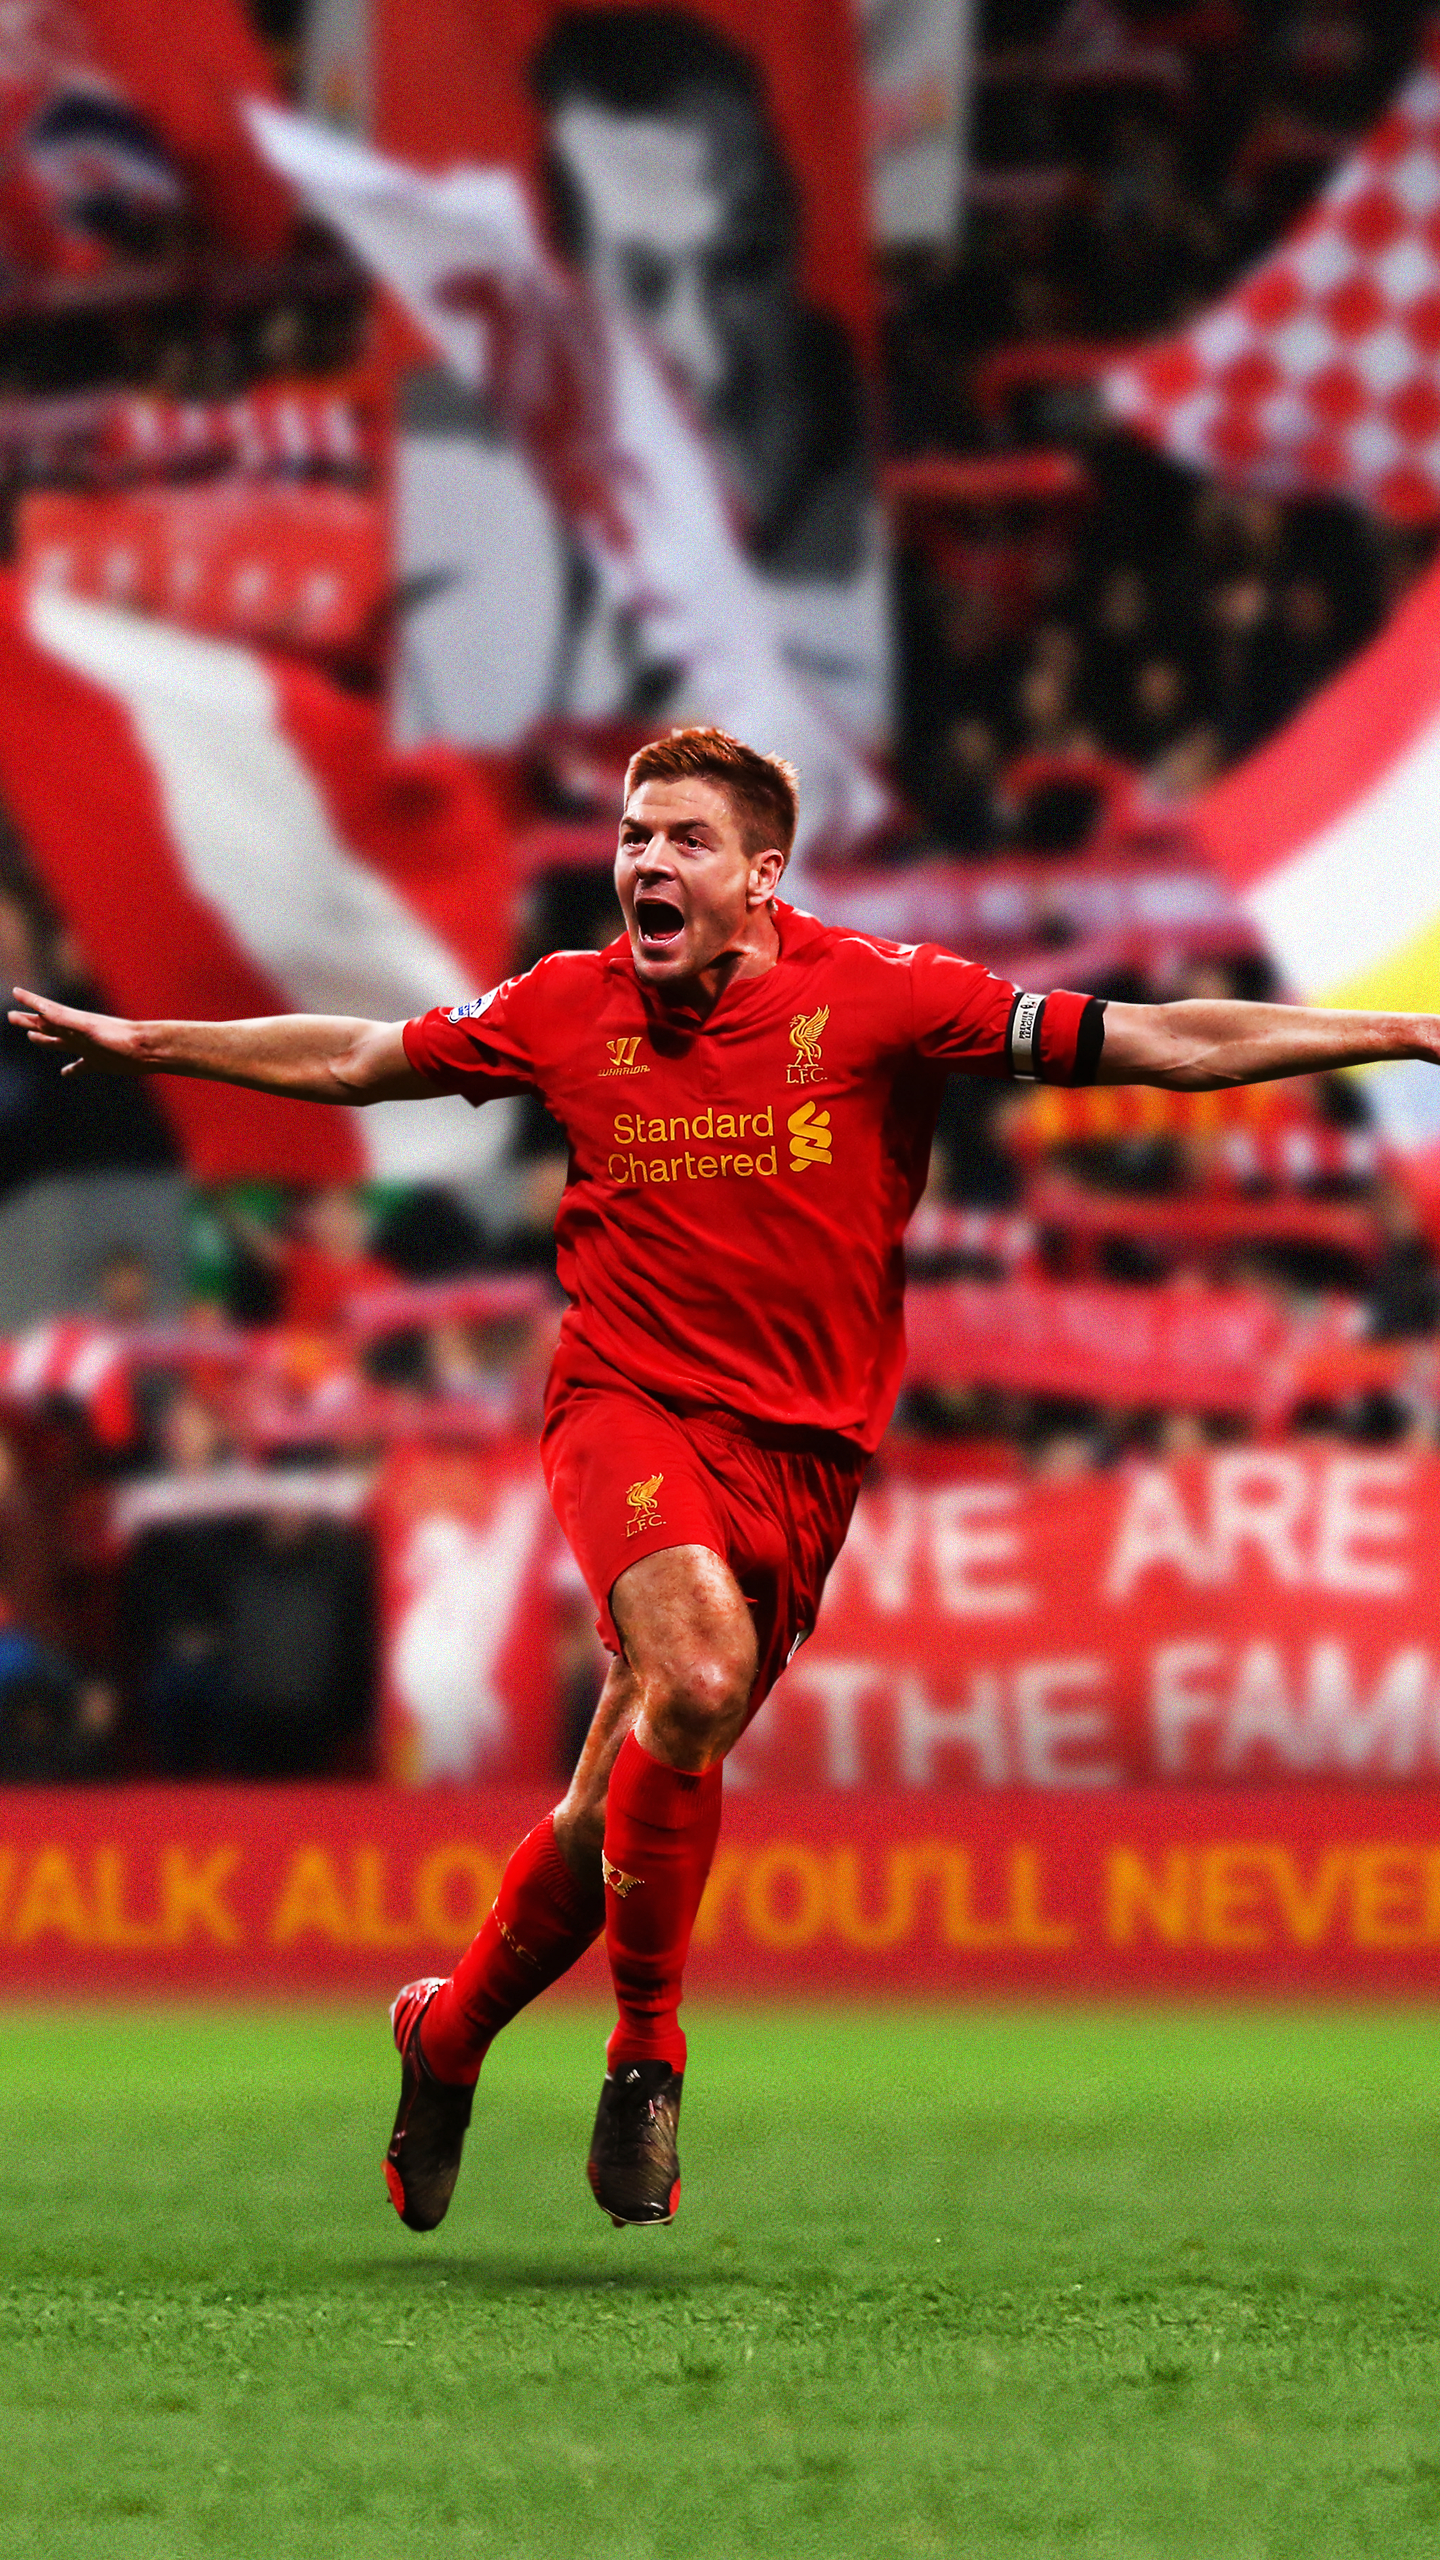 1440x2560 Steven Gerrard Liverpool Wallpapers Top Free Steven Gerrard Liverpool Backgrounds